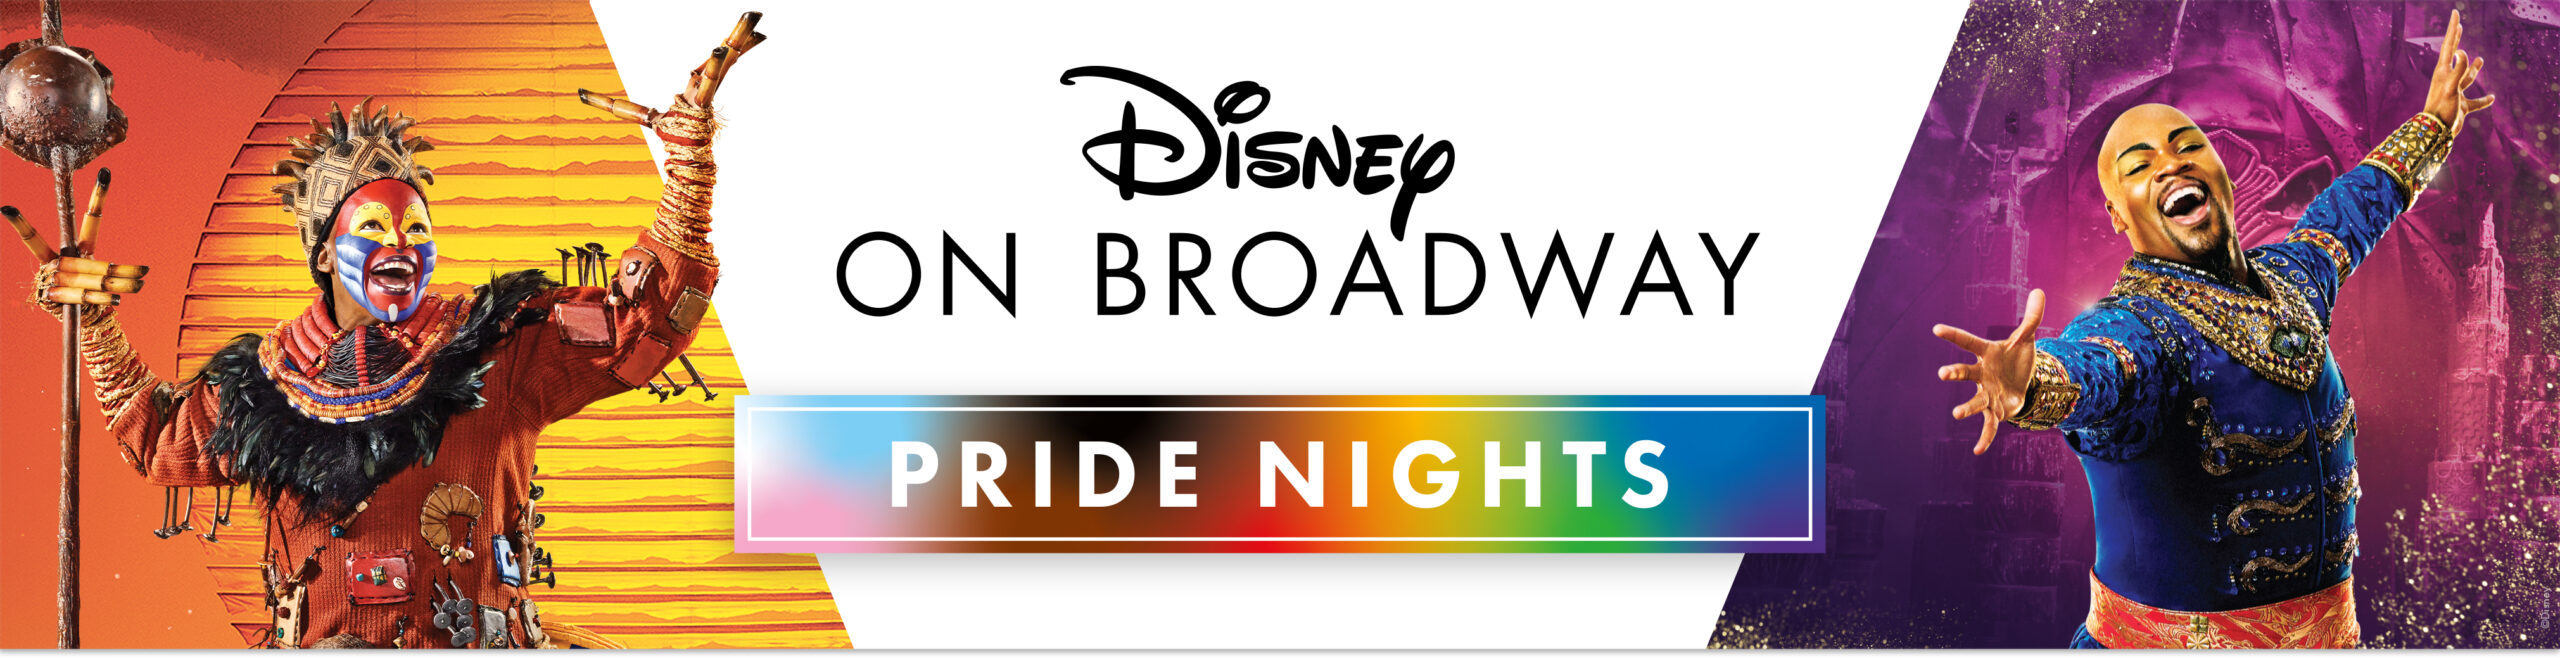 Disney on Broadway Pride NIghts